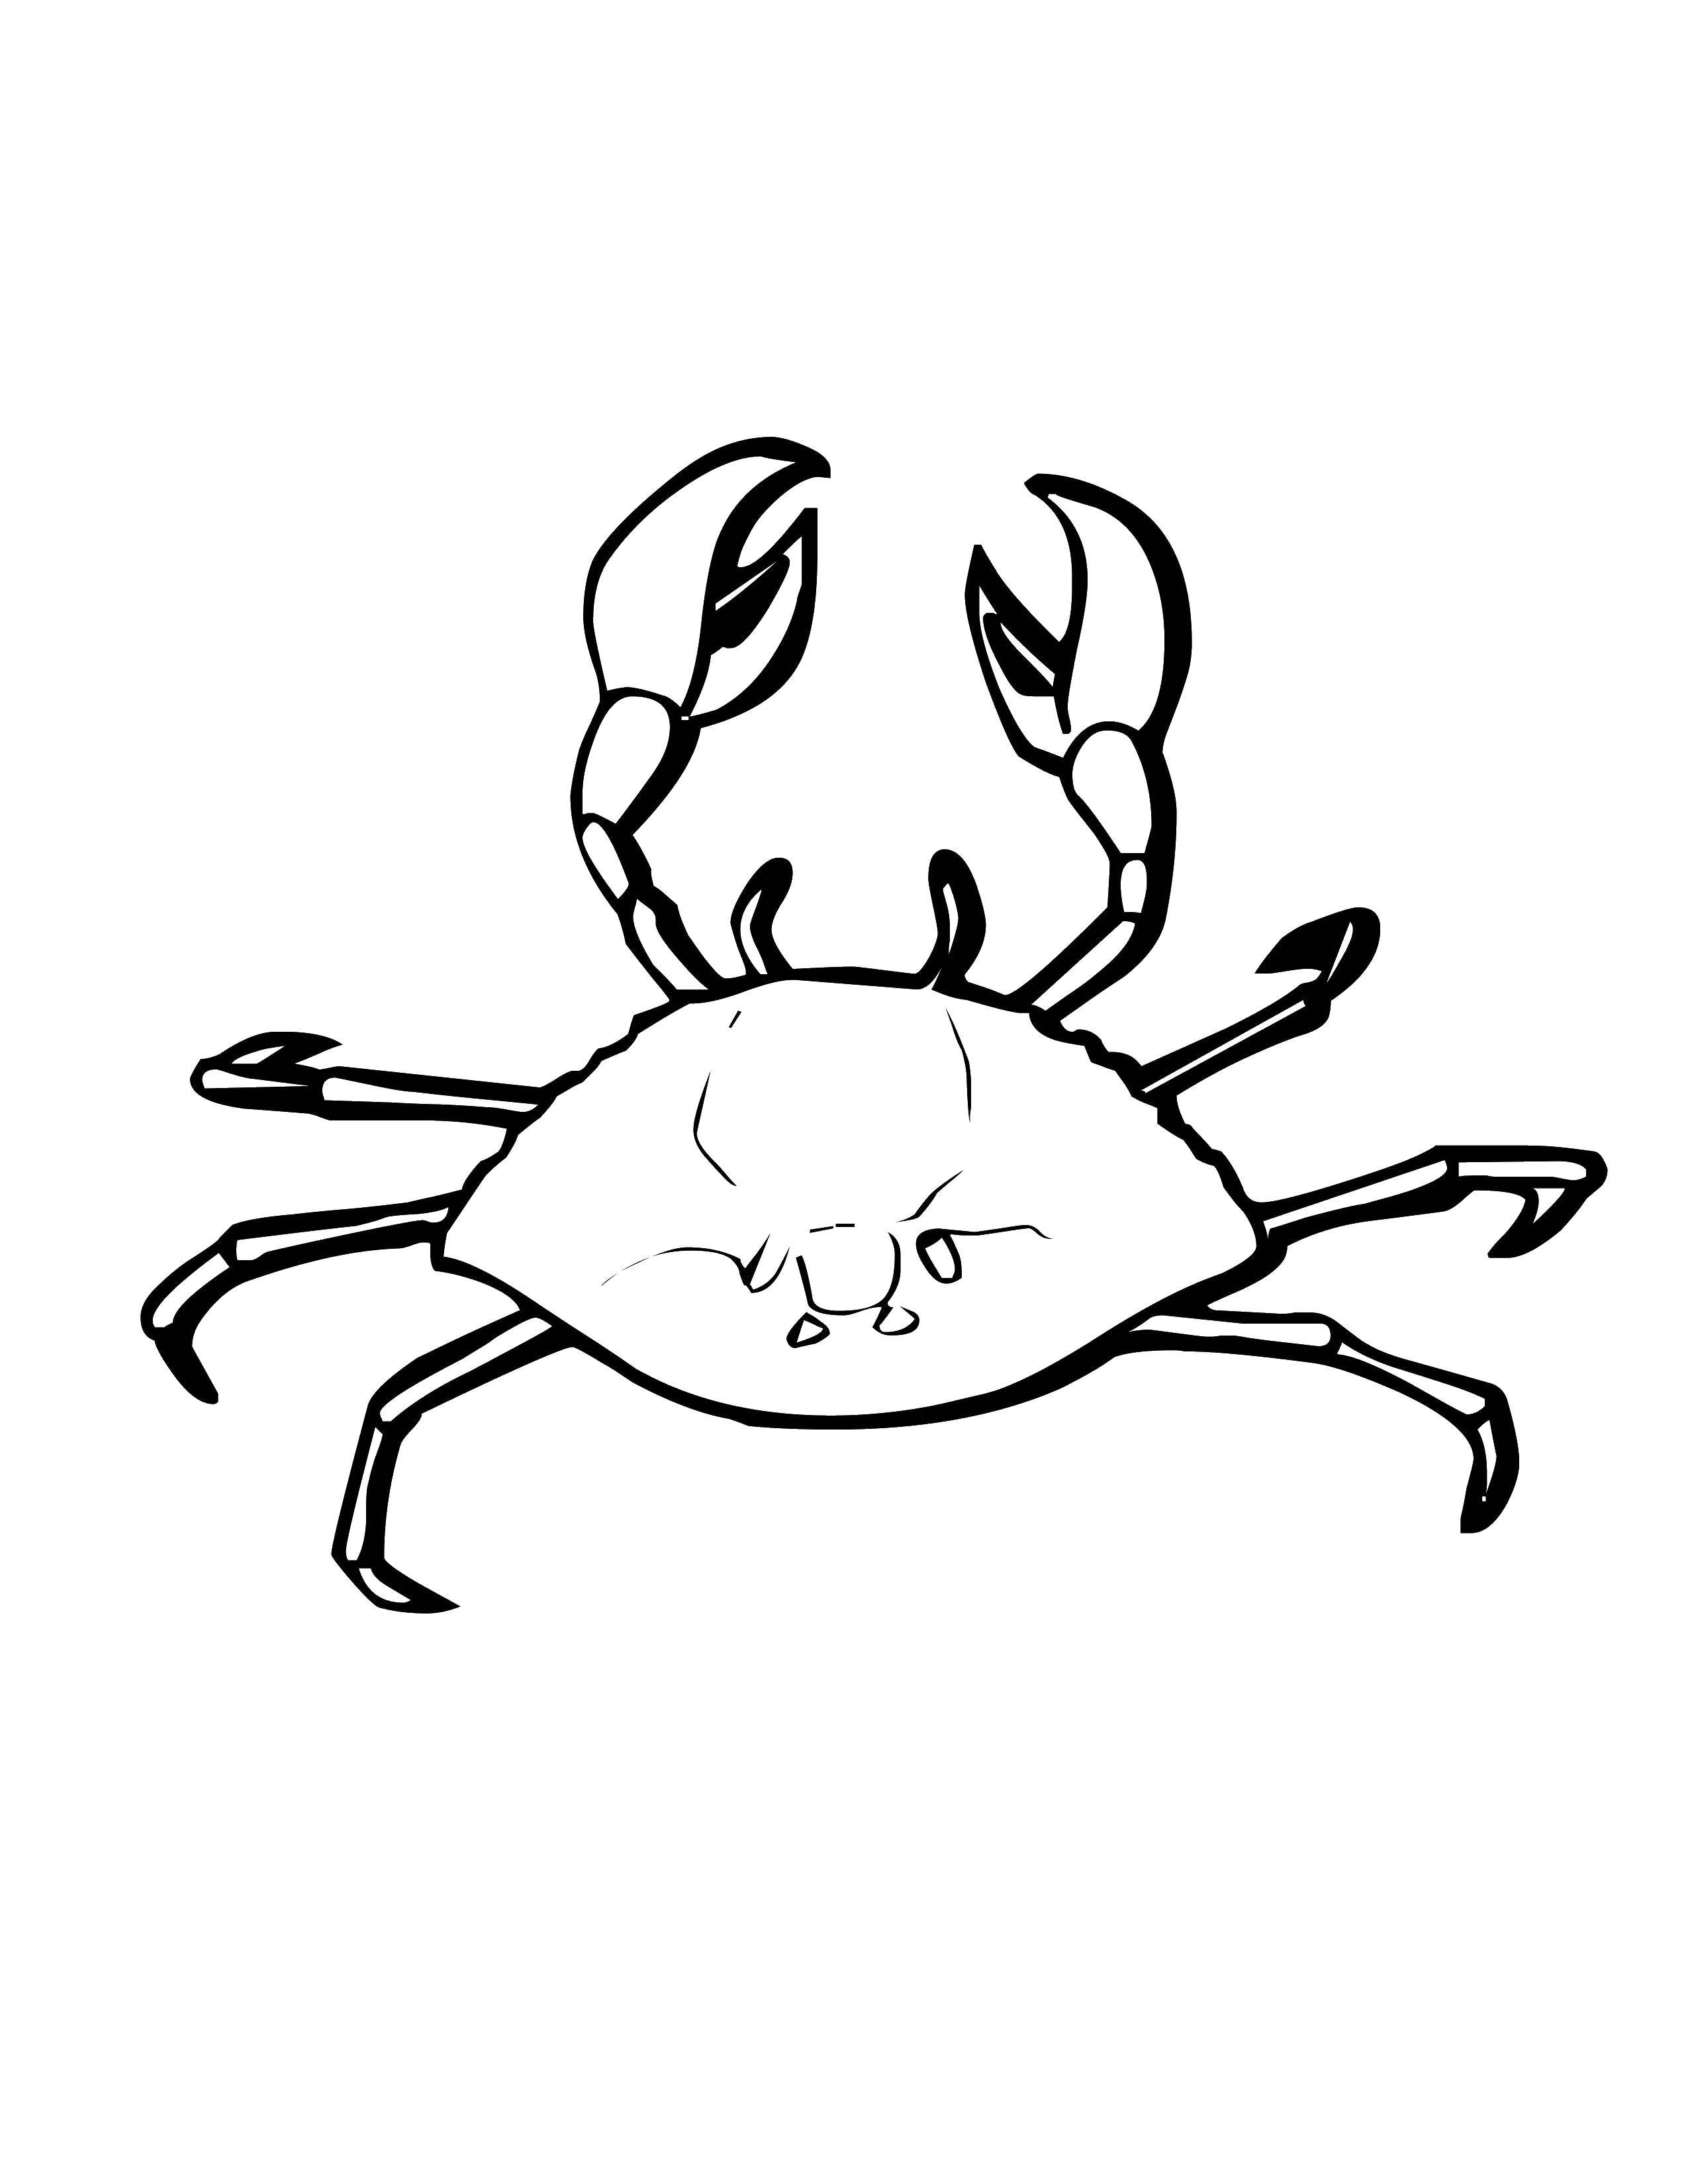 Coloring Crab. Category Crab. Tags:  animals, crabs, crab, sea animals.